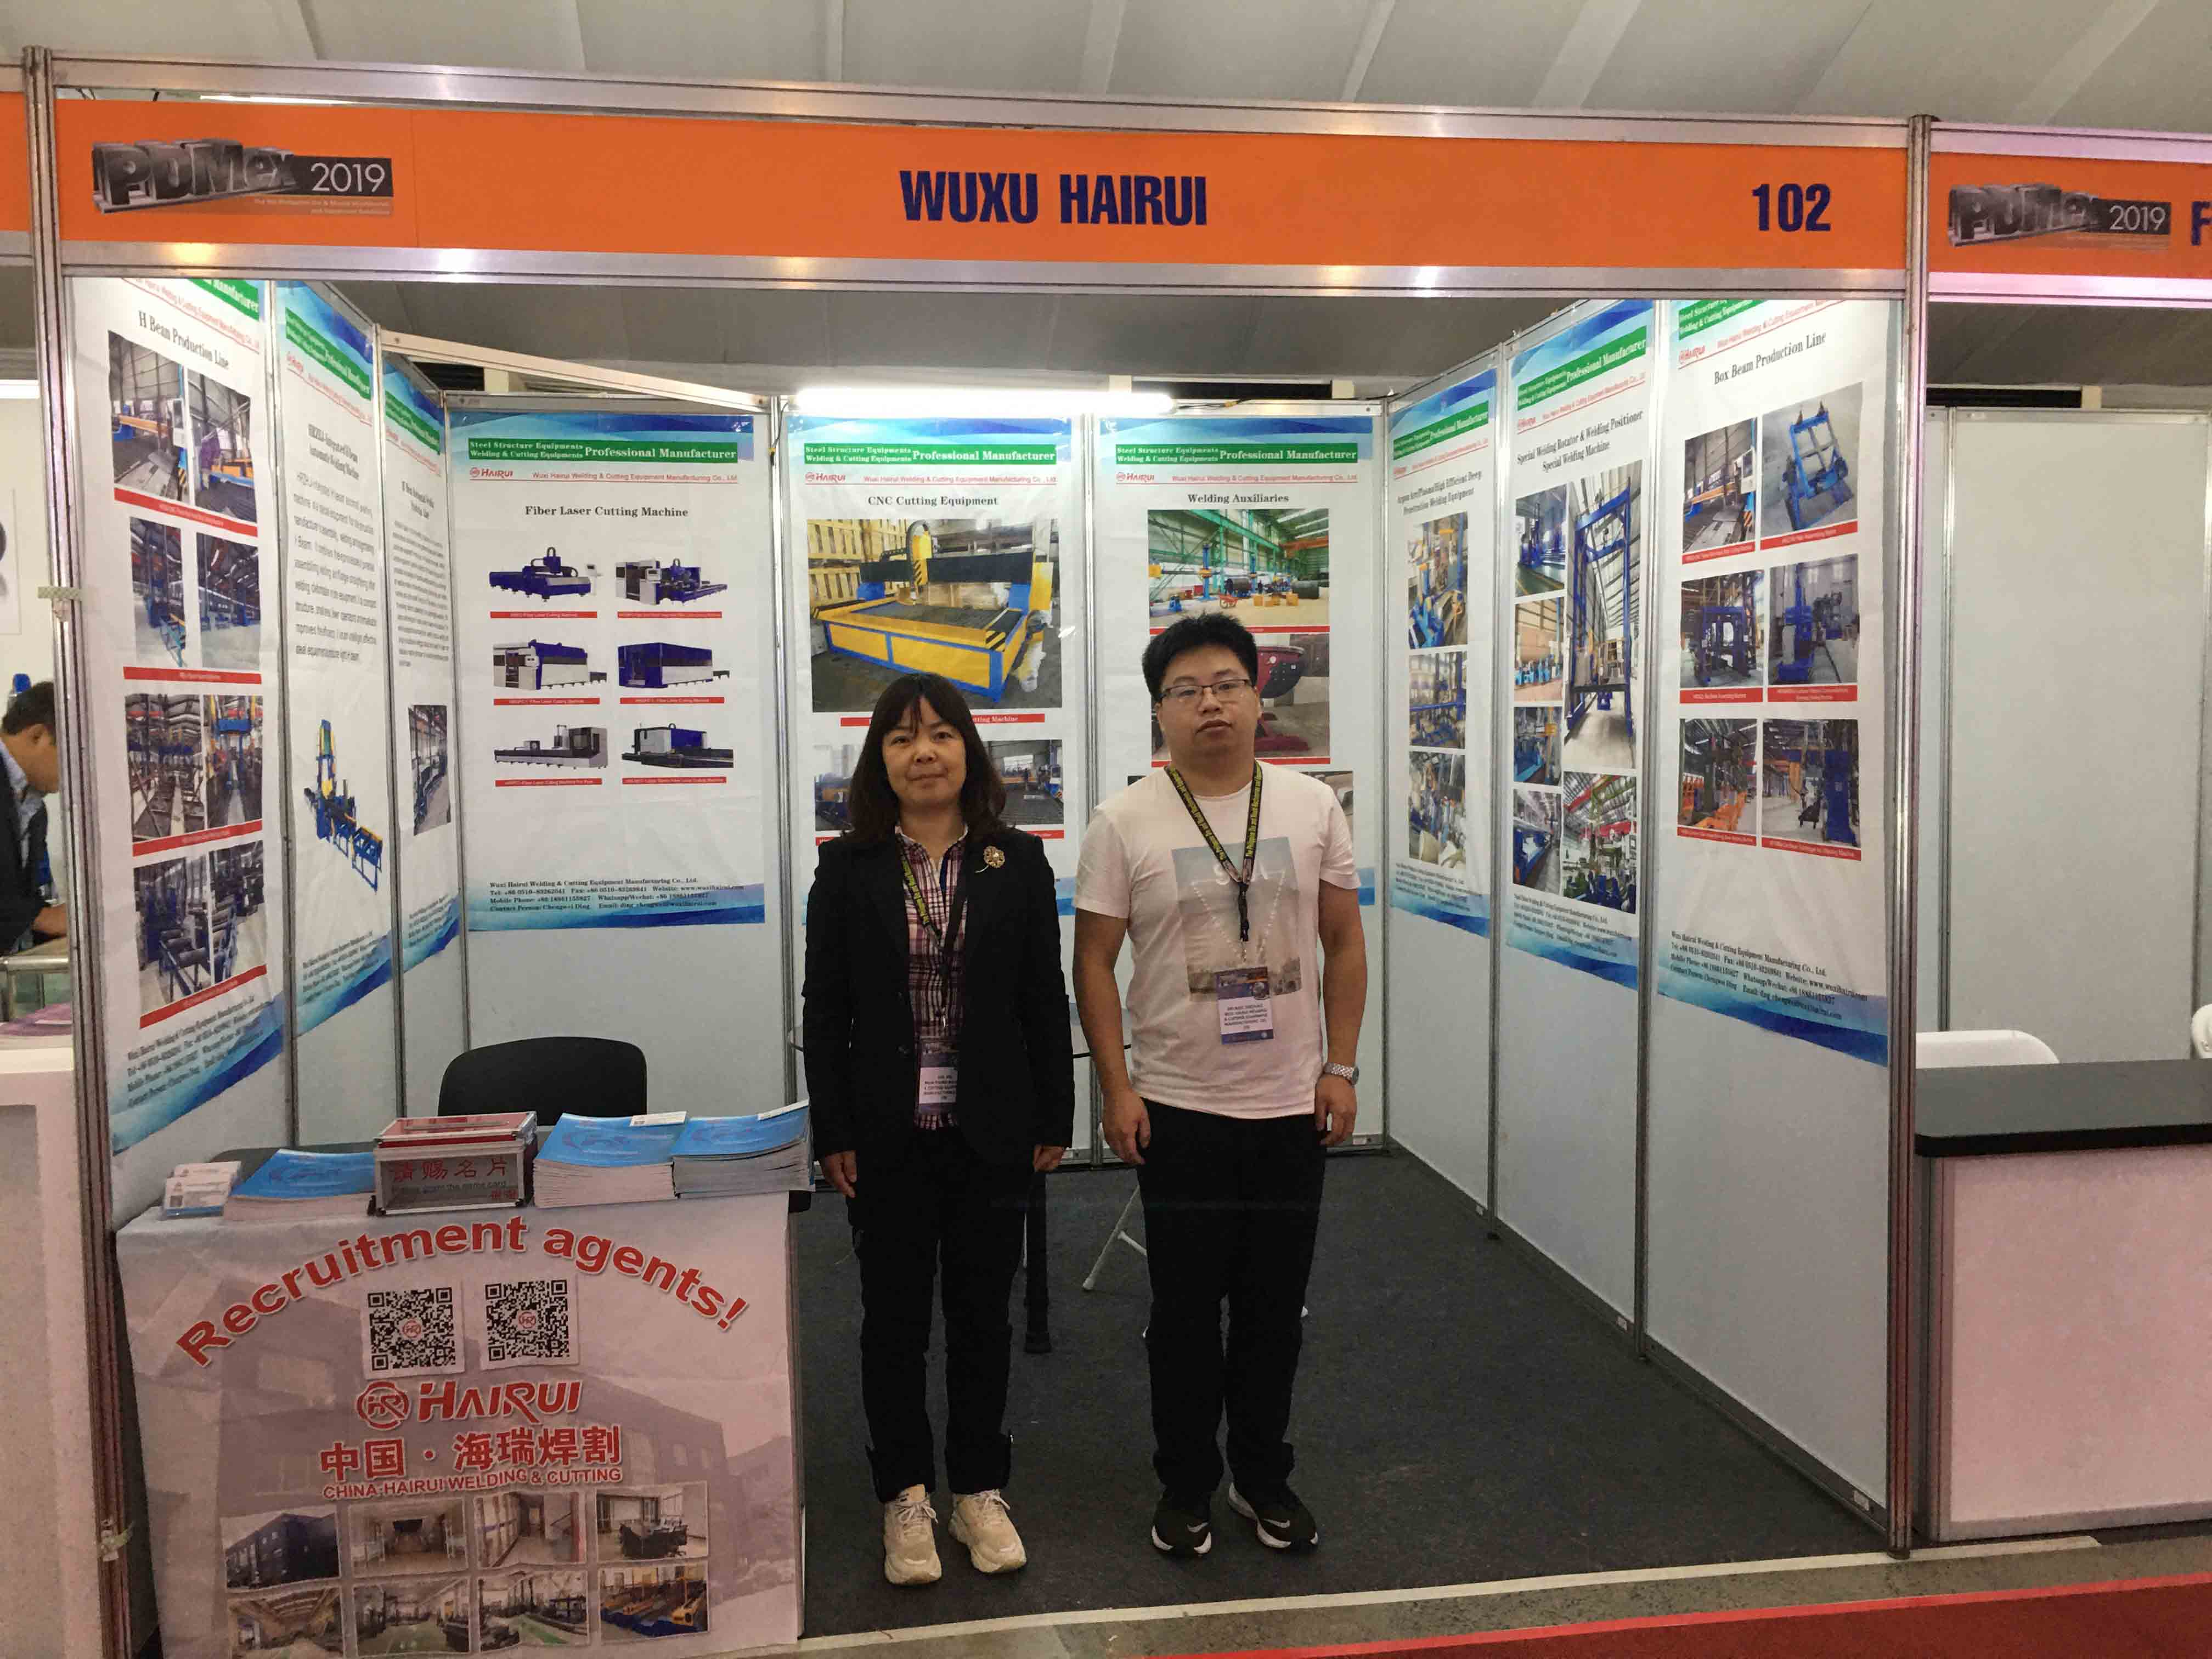 Manila, Philippines-International Machine Tool & Metalworking Technology Exhibitions, August 2019